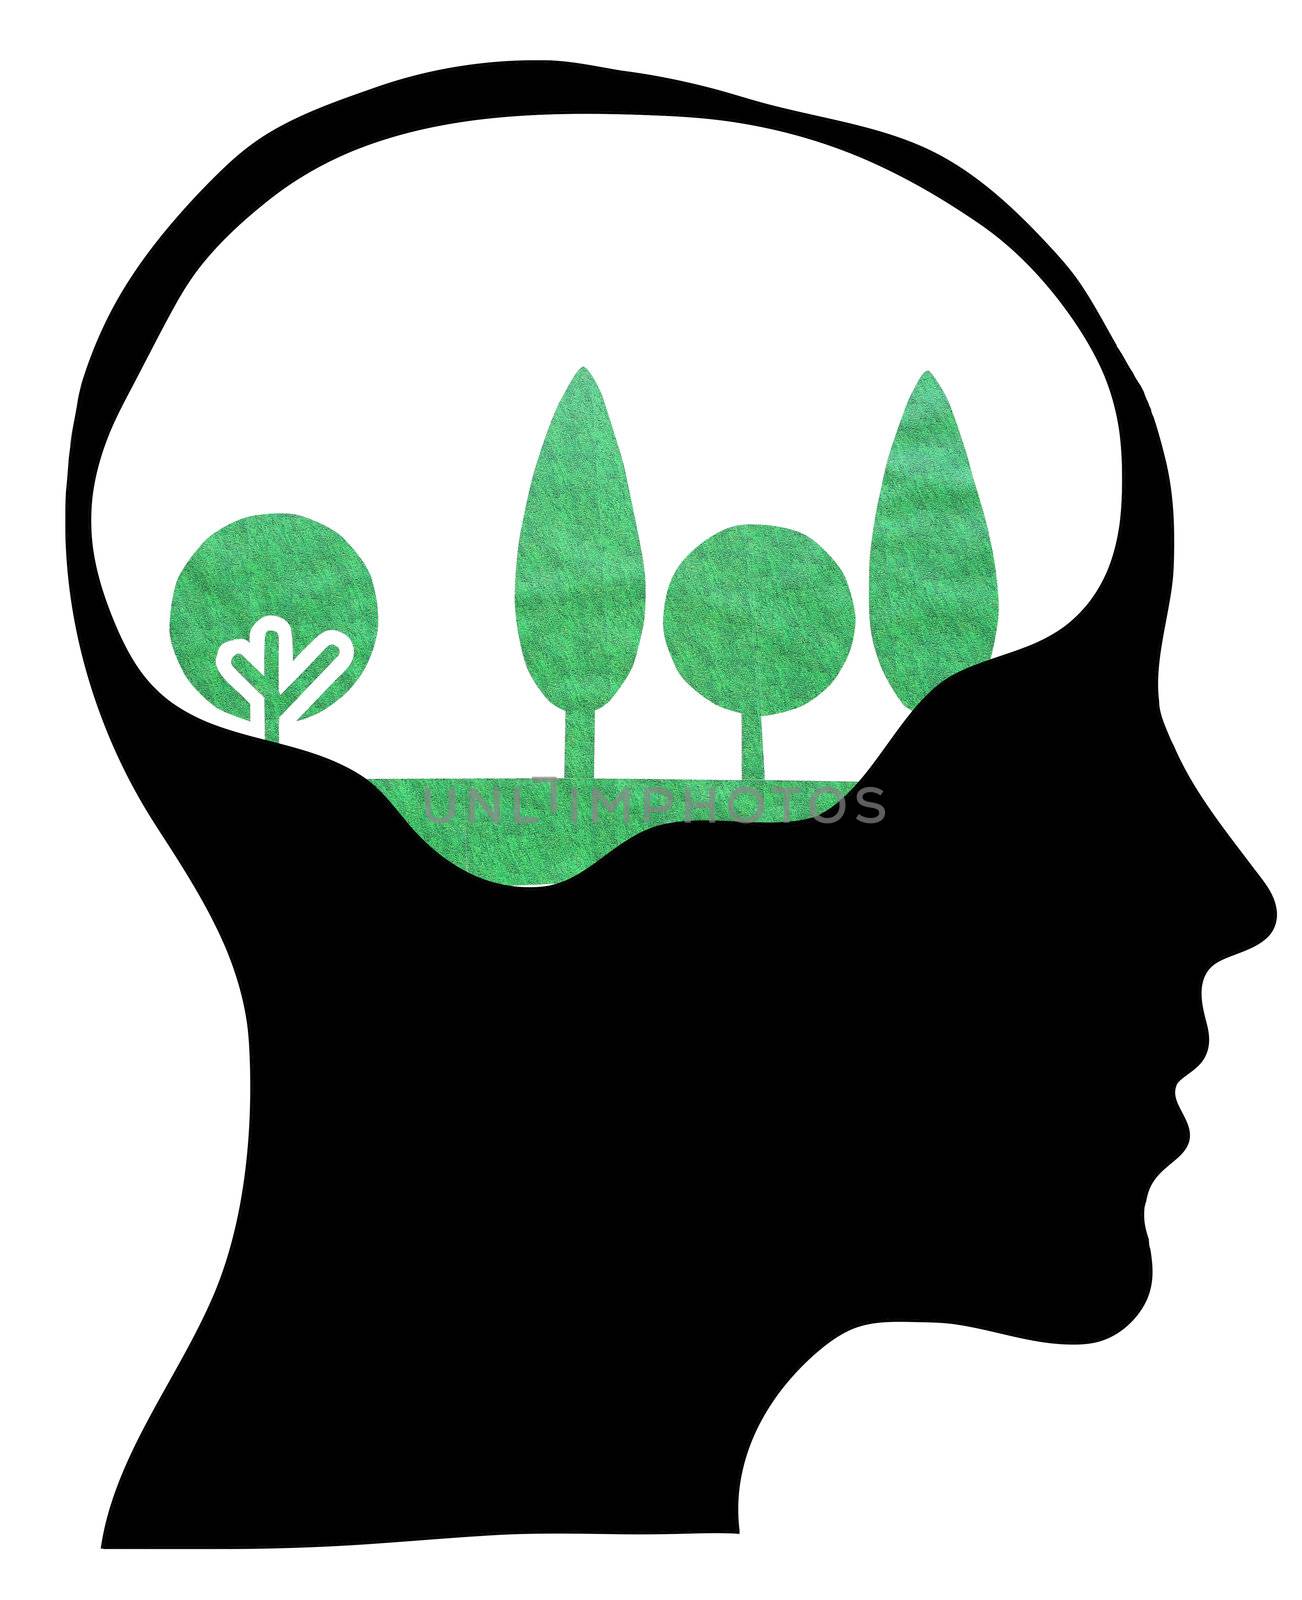 Think green – human mind